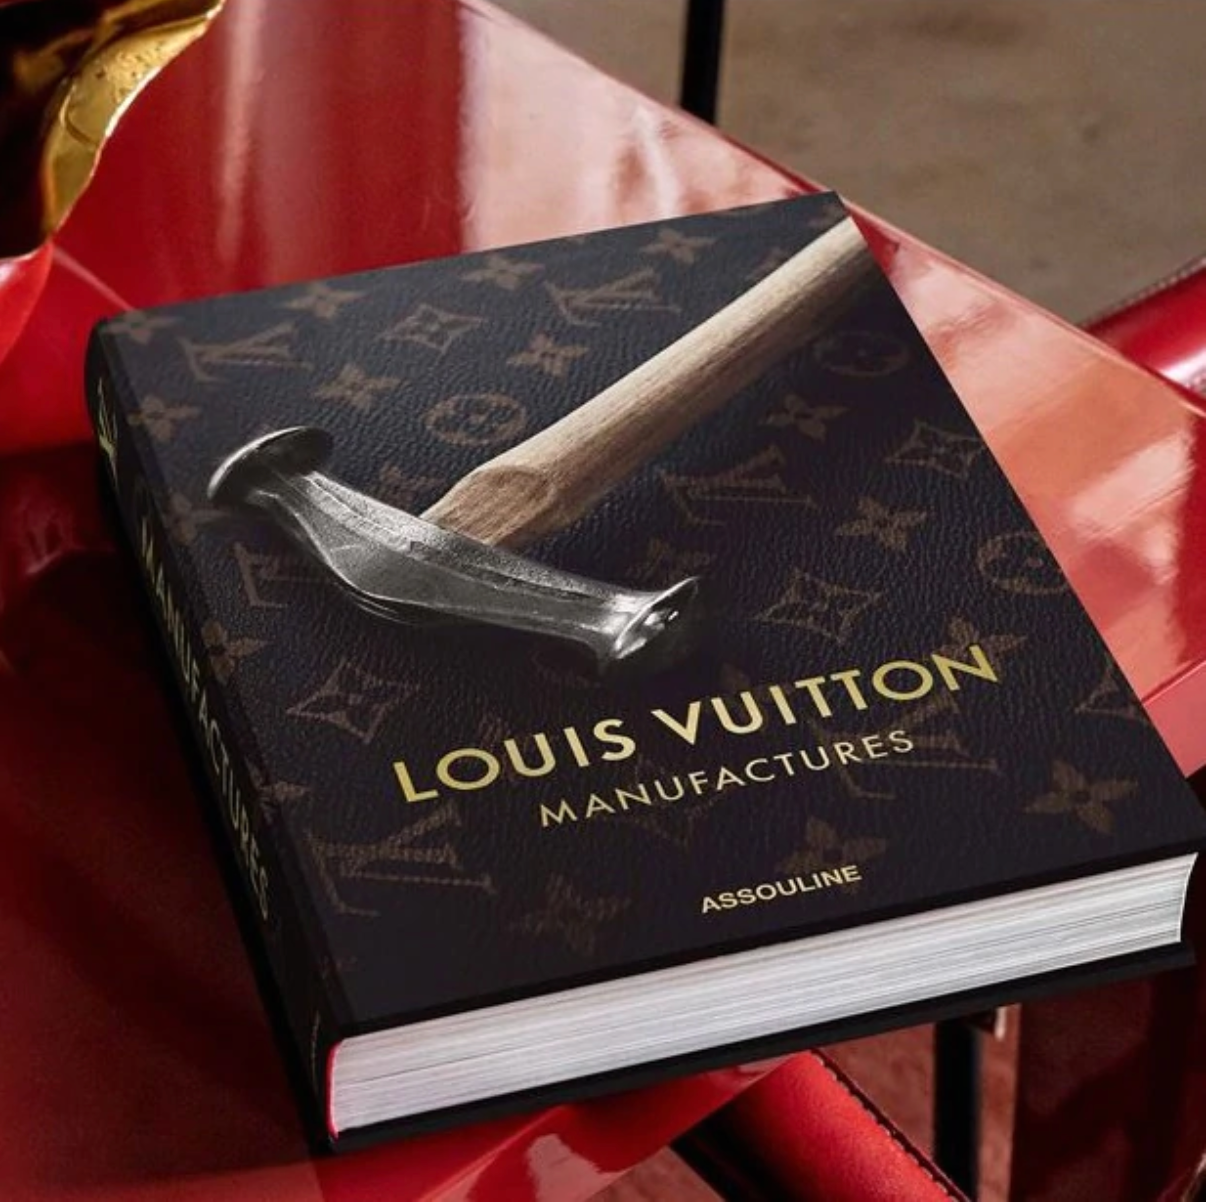 Empty Vase - Book - Louis Vuitton Manufactures - By Assouline